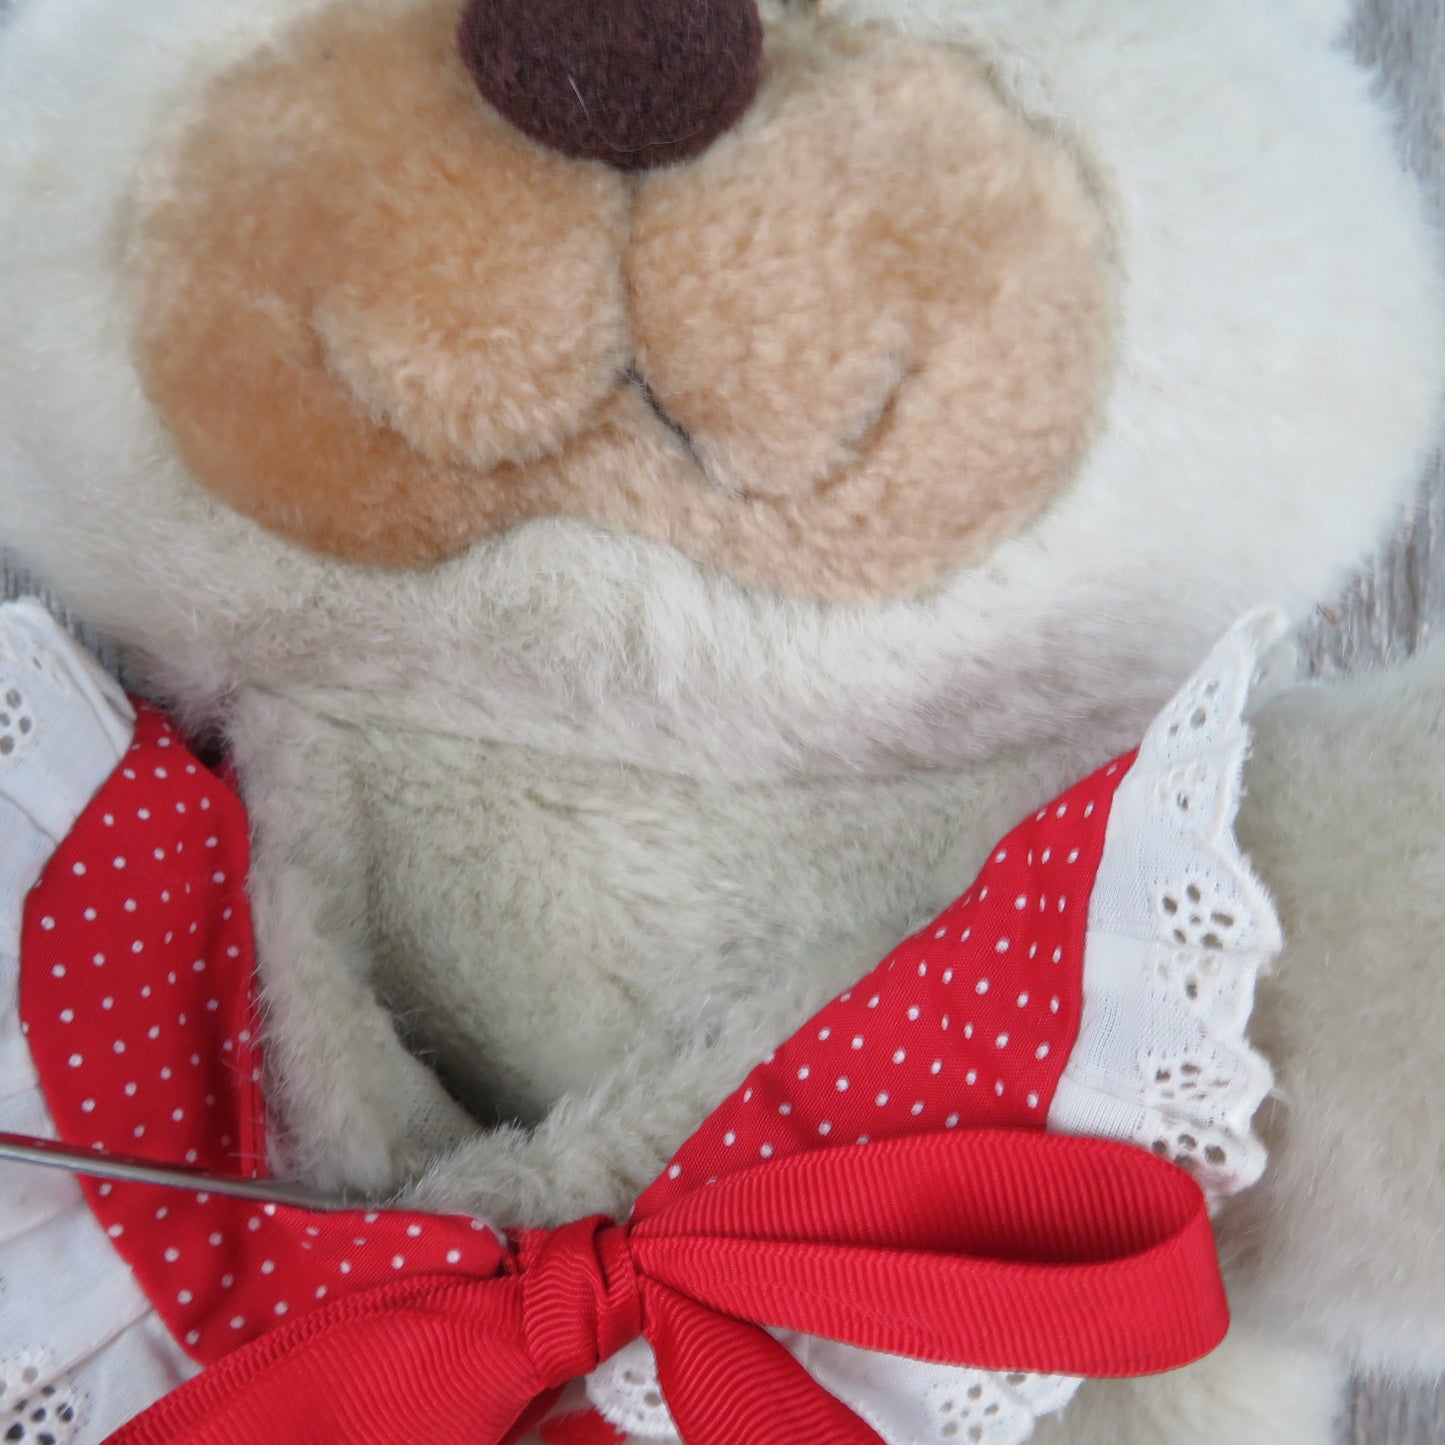 Vintage Teddy Bear Stocking Hallmark Baby Red Collar Lace Christmas Plush Stuffed Animal 1985 - At Grandma's Table